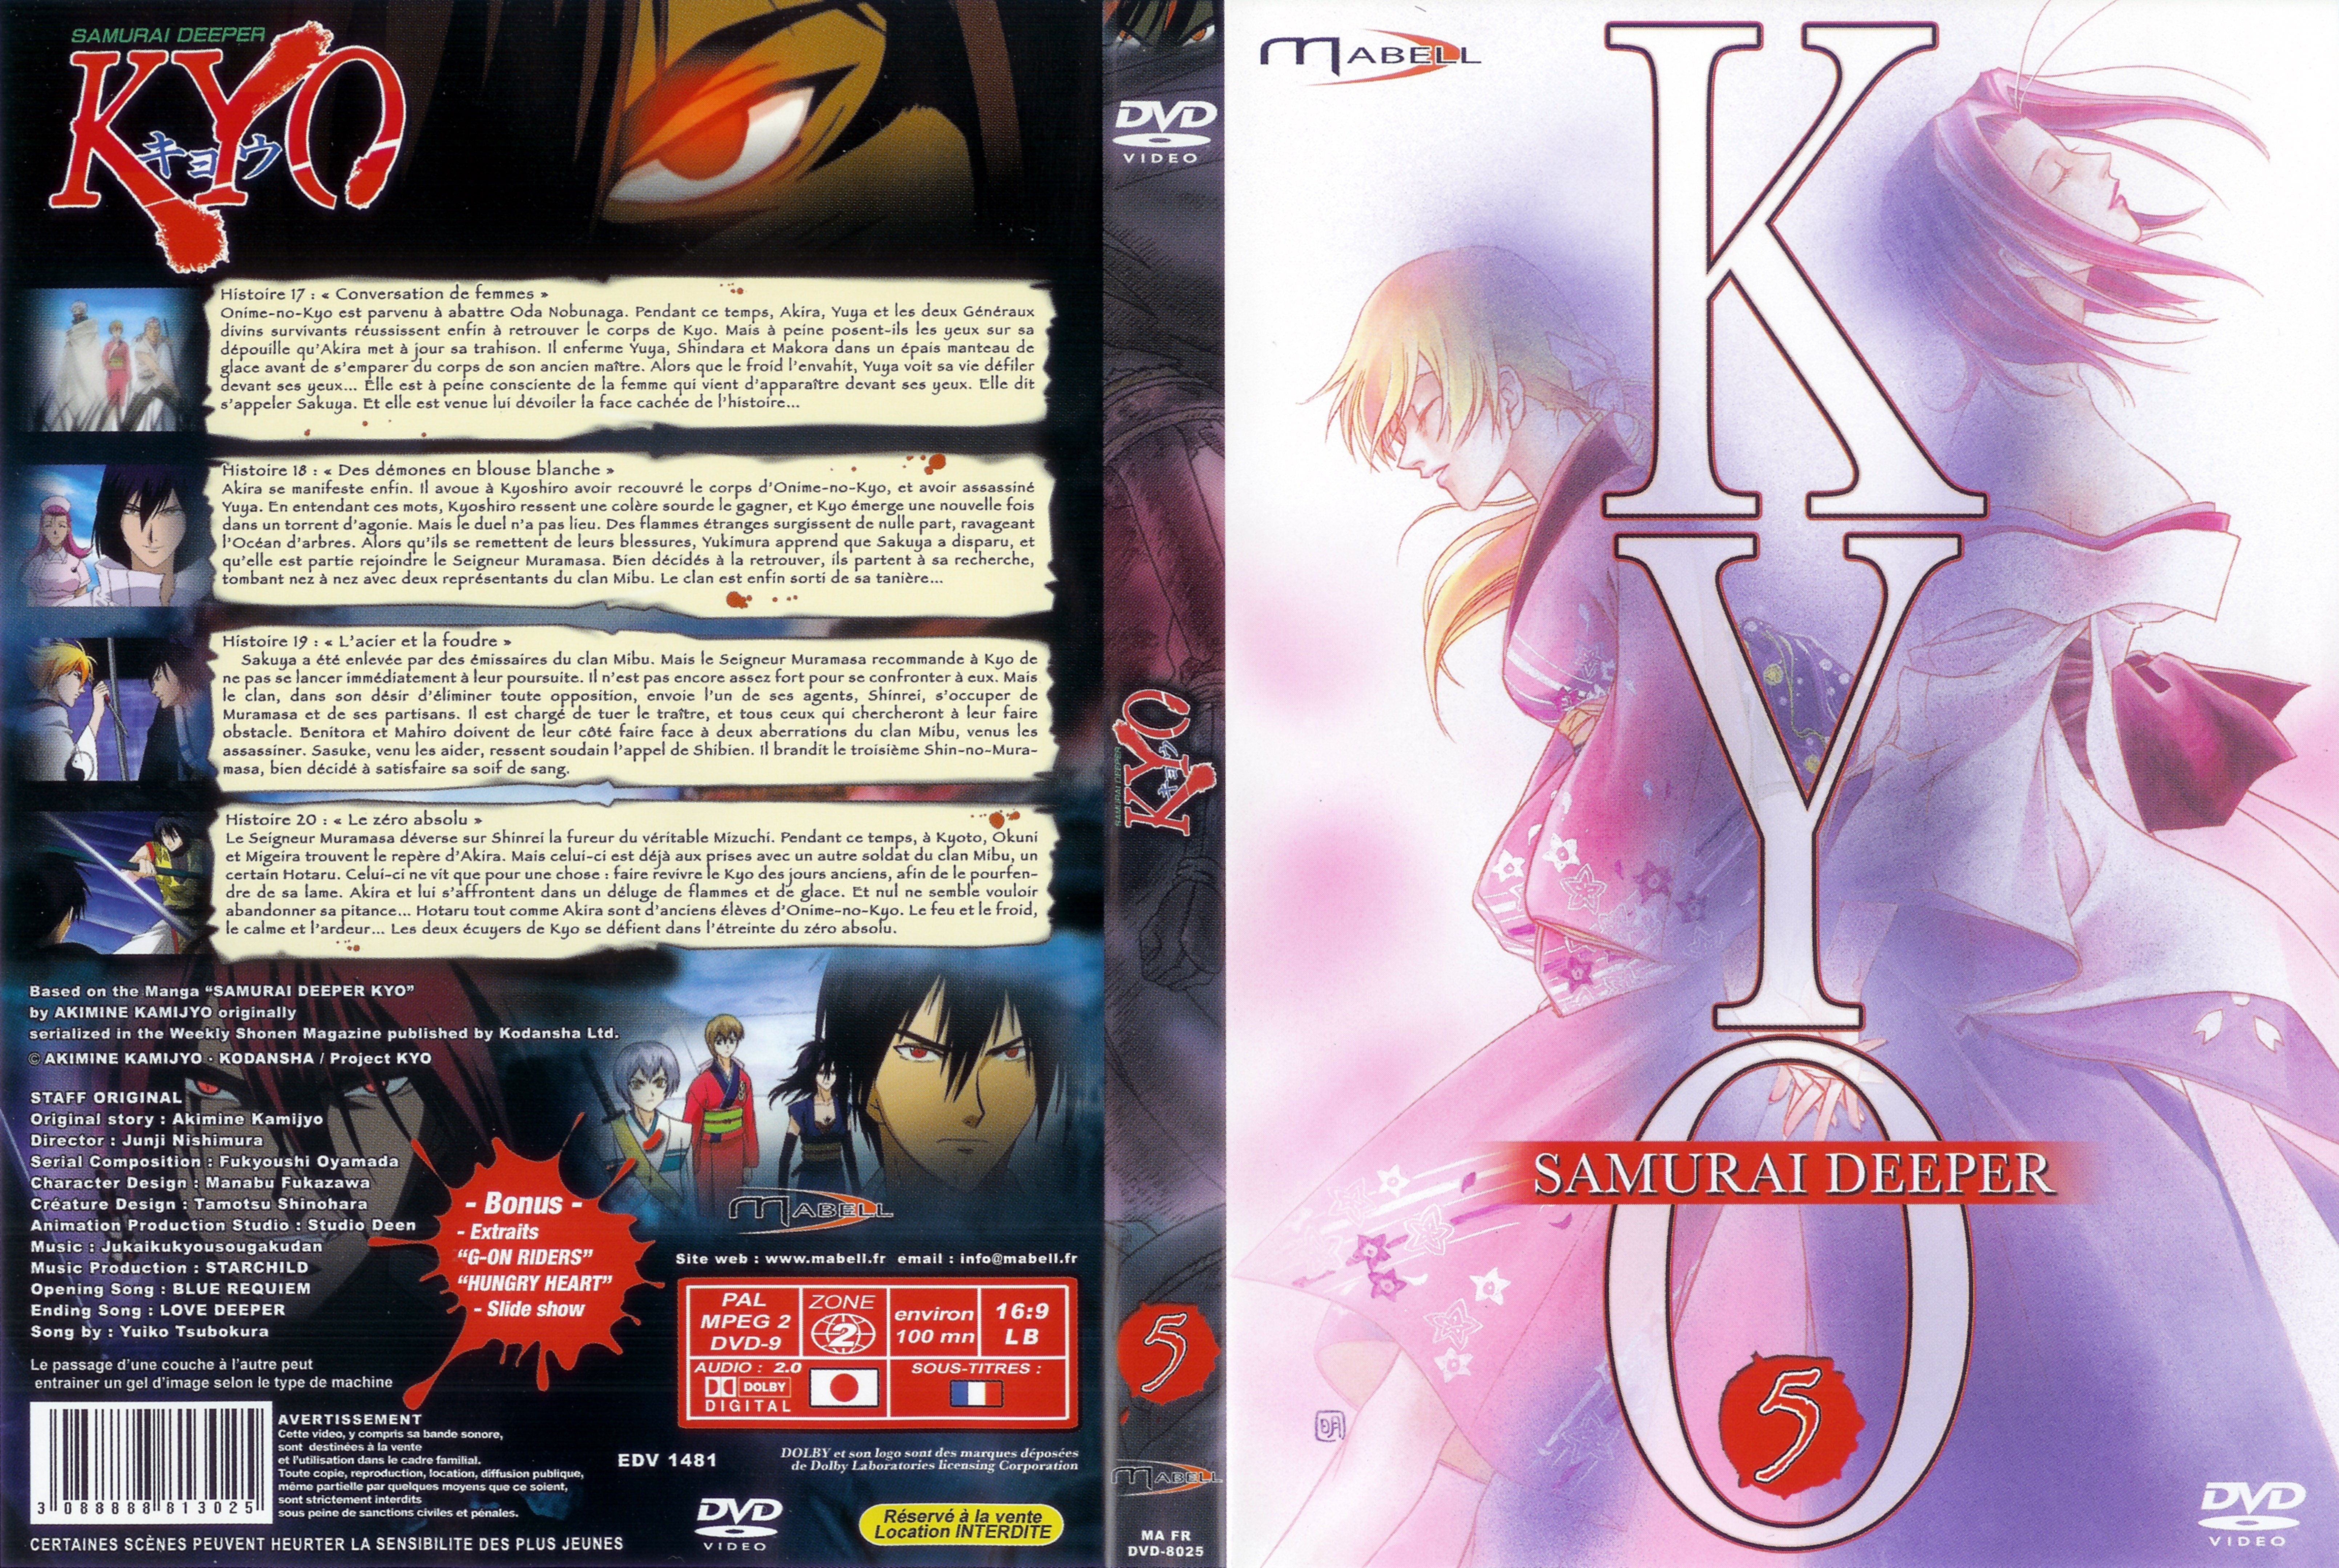 Jaquette DVD Kyo vol 5